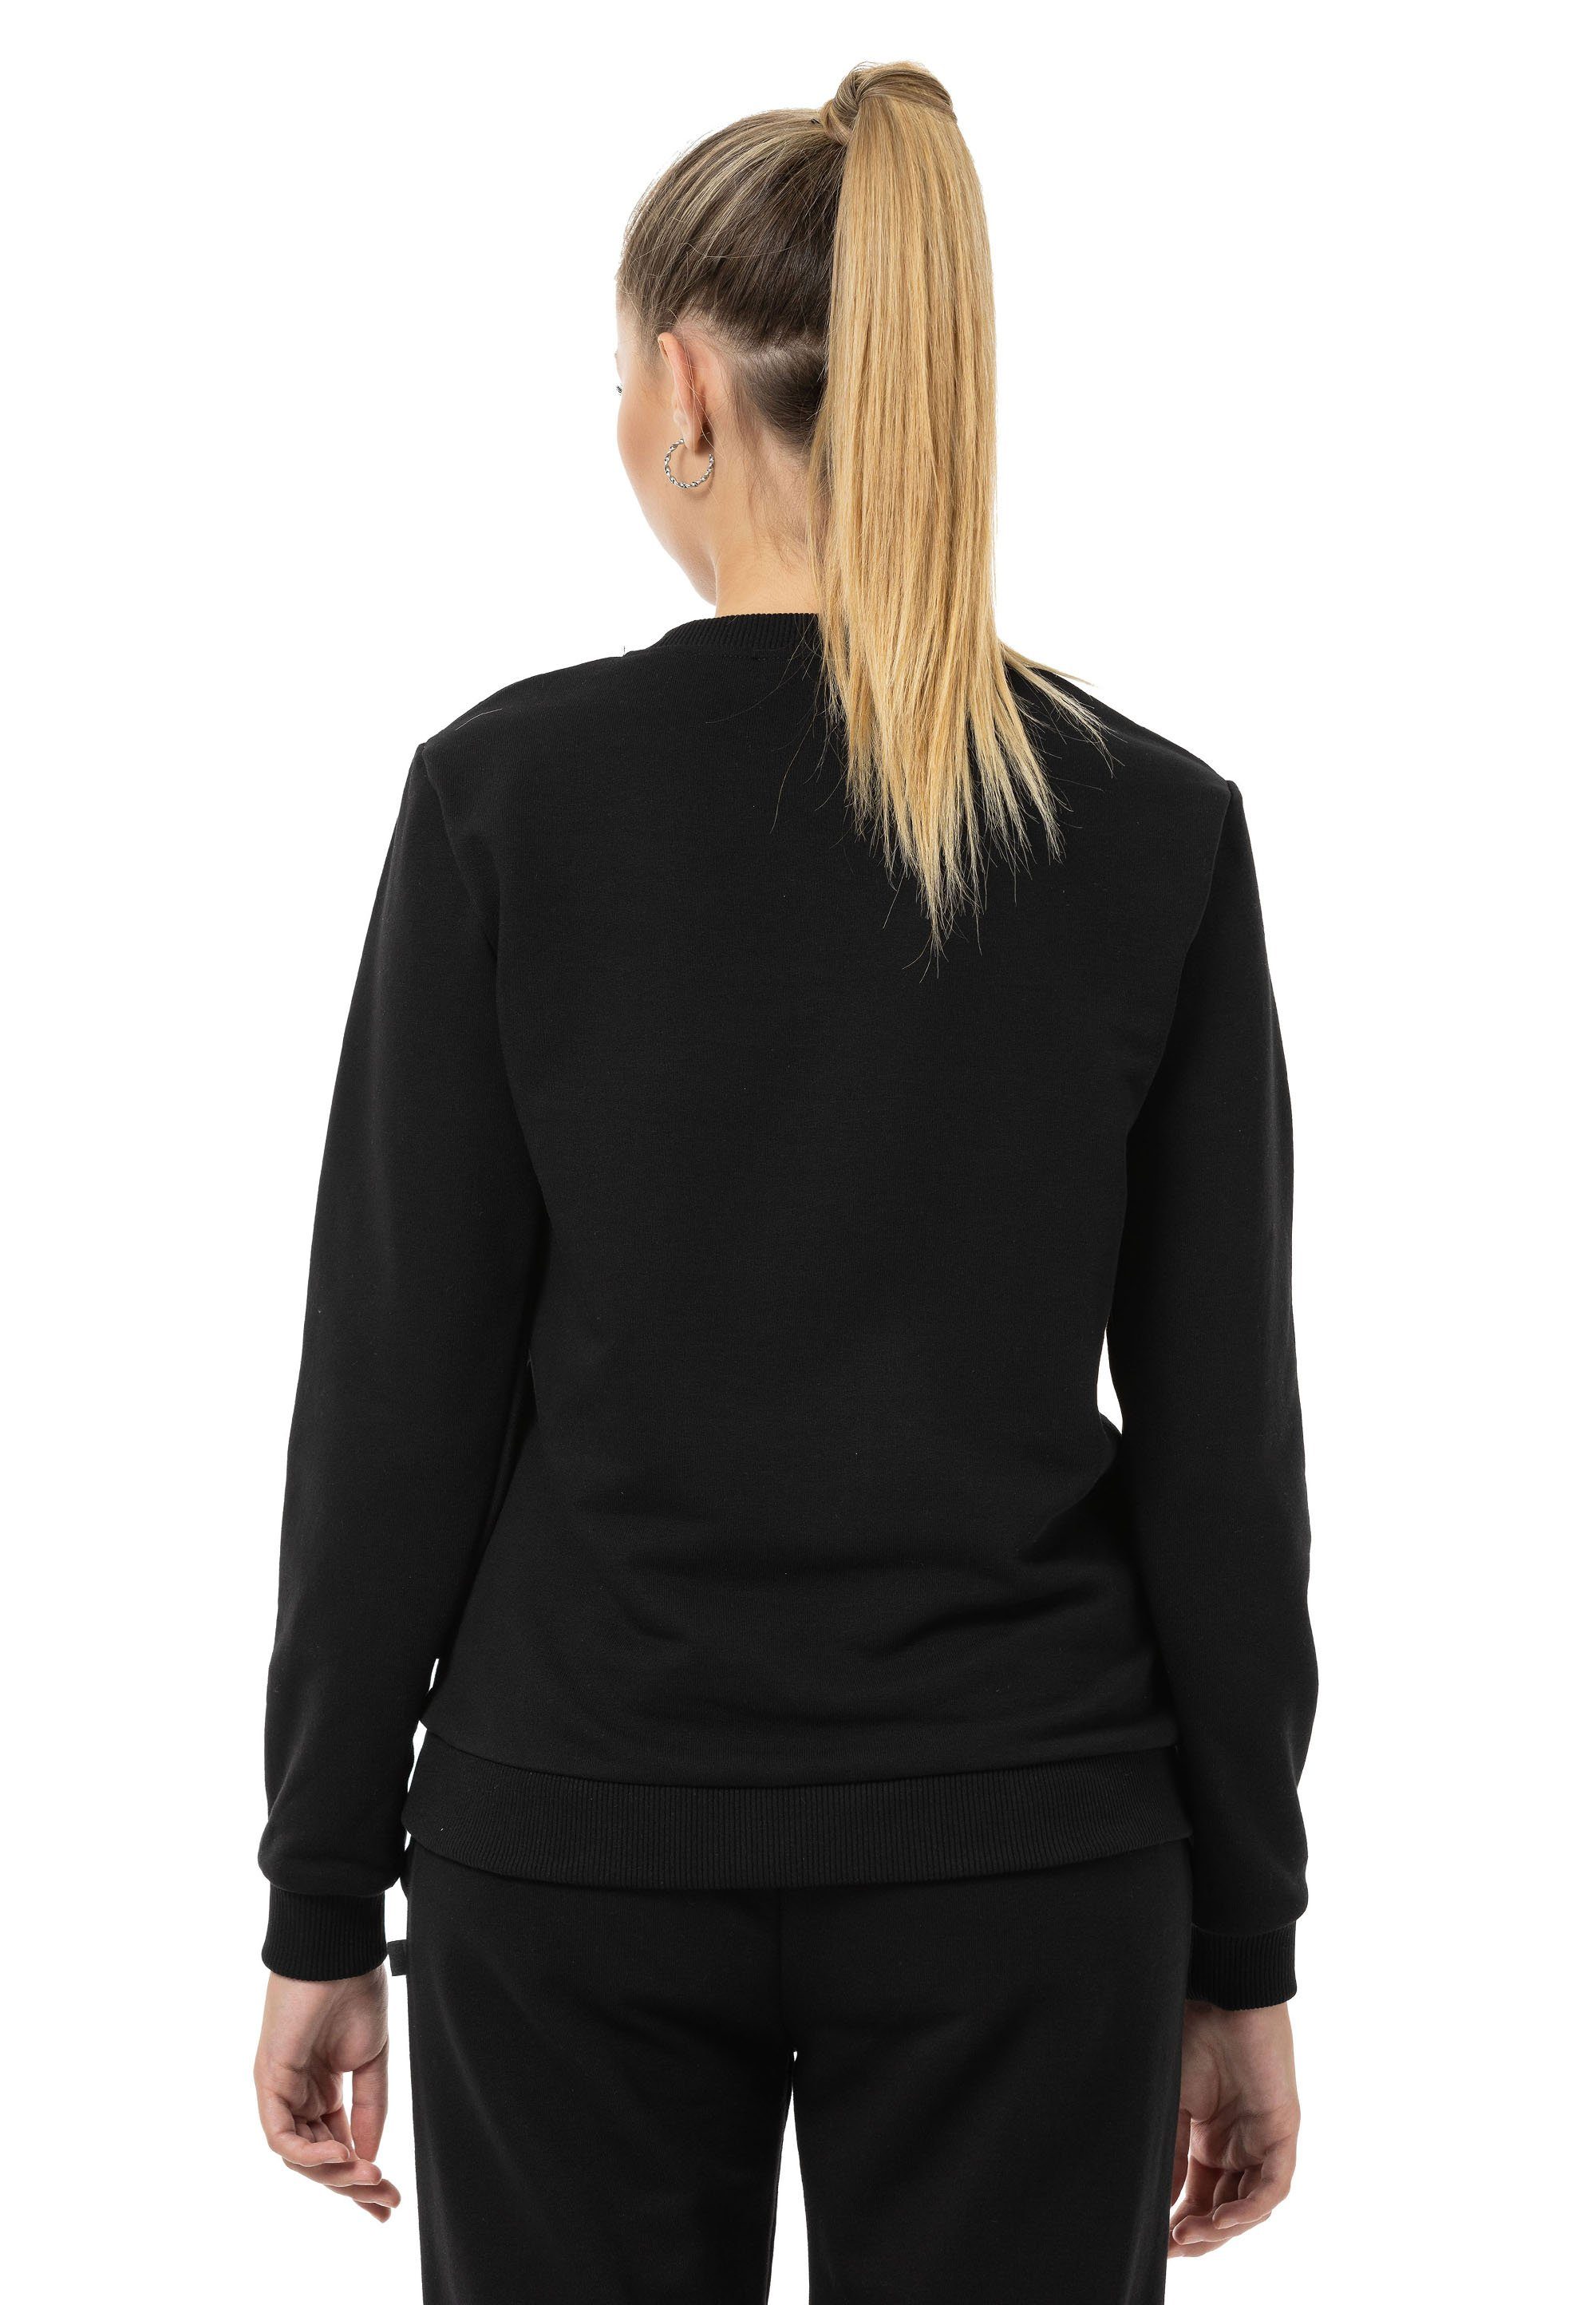 Basic Schwarz mit (Spar-Set, Premium Qualität Premium RedBridge Sweatpant Sweatshirt Jogginganzug 2-tlg),